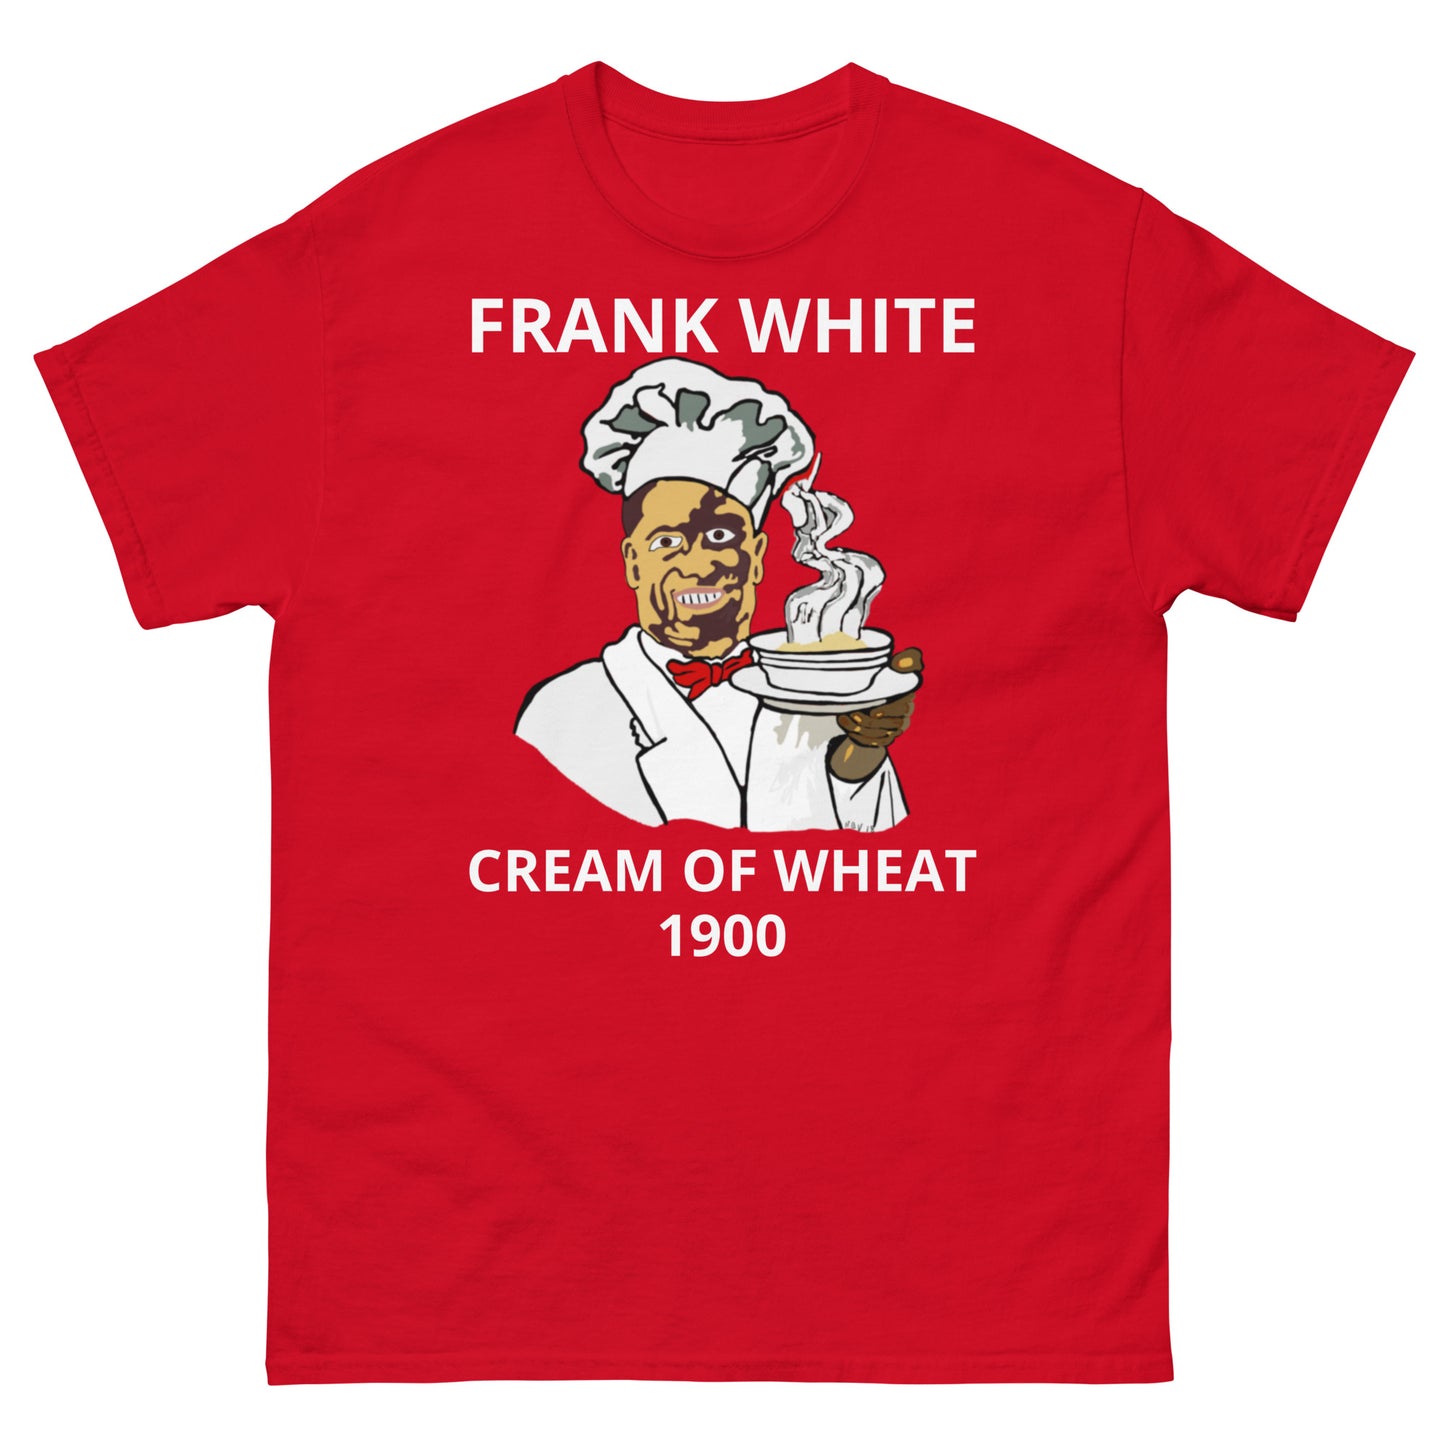 FRANK WHITE Men's classic tee